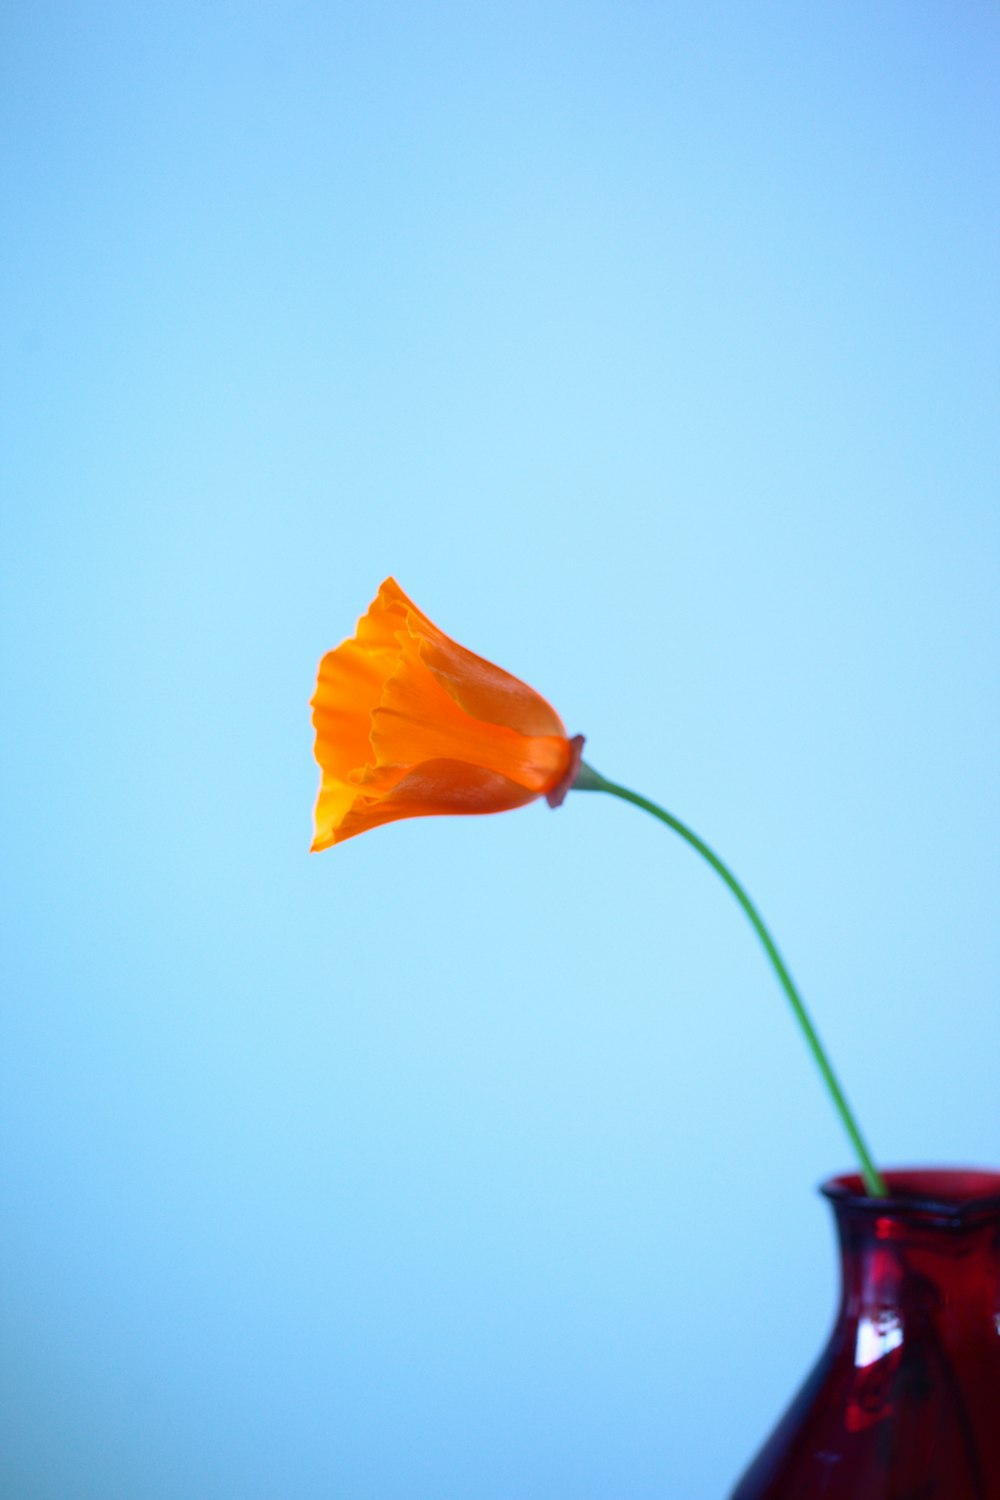 orange flower on red vase photo – Free California poppy Image on Unsplash